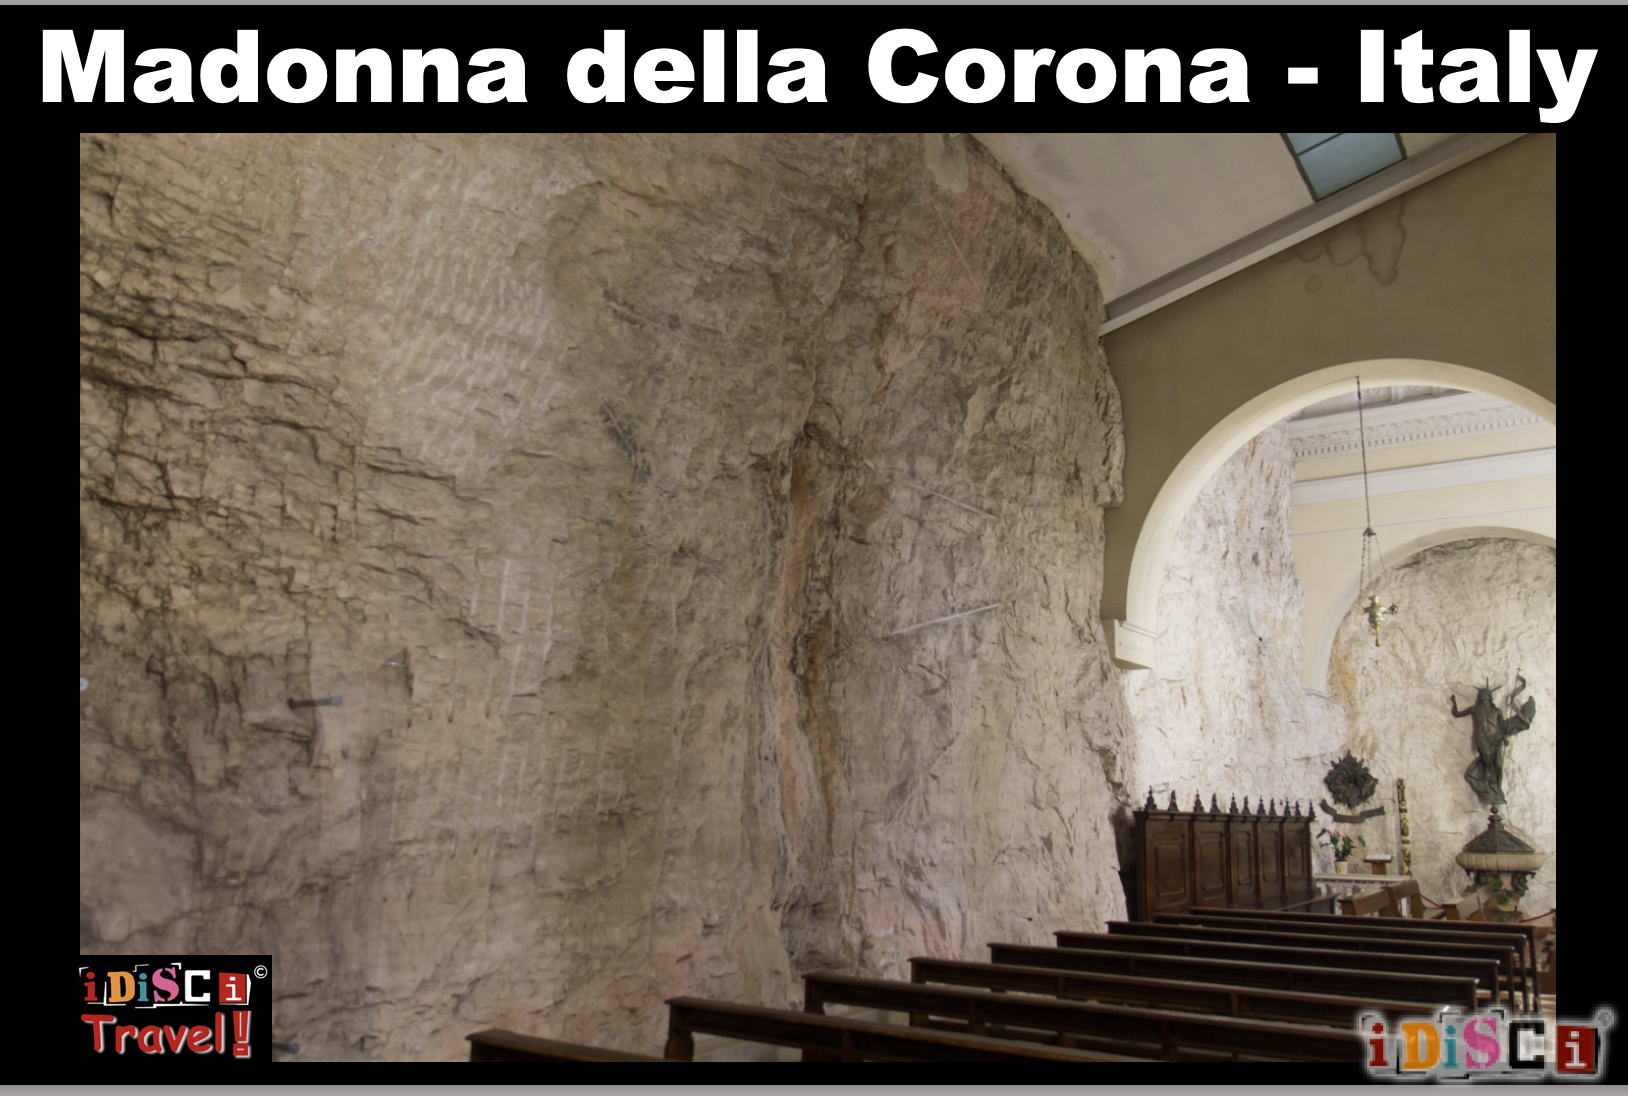 Madonna della Corona, Lake Garda, Northern Italy, SS249, 16th century, Middle Ages, Renaissance, Renaissance Art, Renaissance Architecture, Baroque Architecture, European Renaissance,